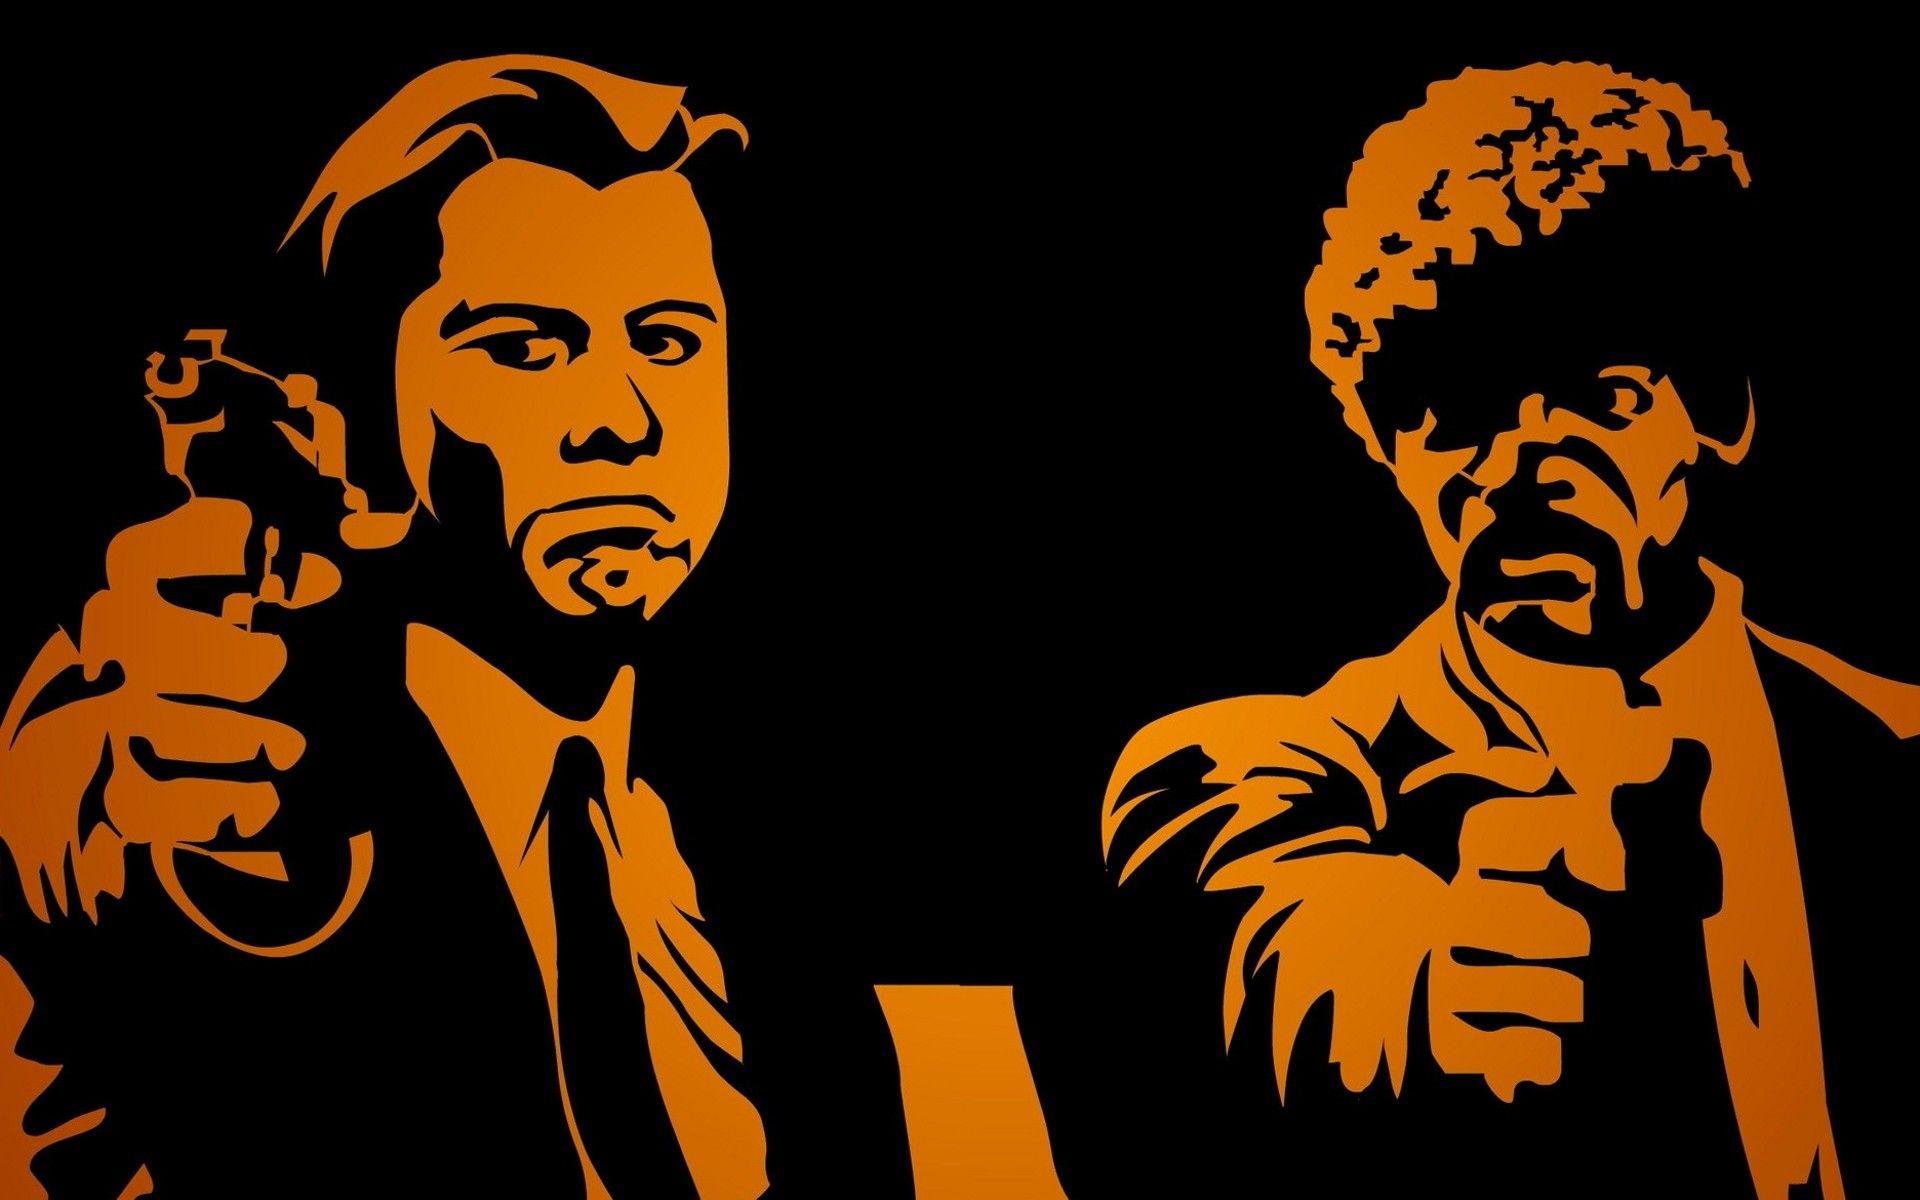 Pulp Fiction Orange Black HD wallpaper. movies and tv series